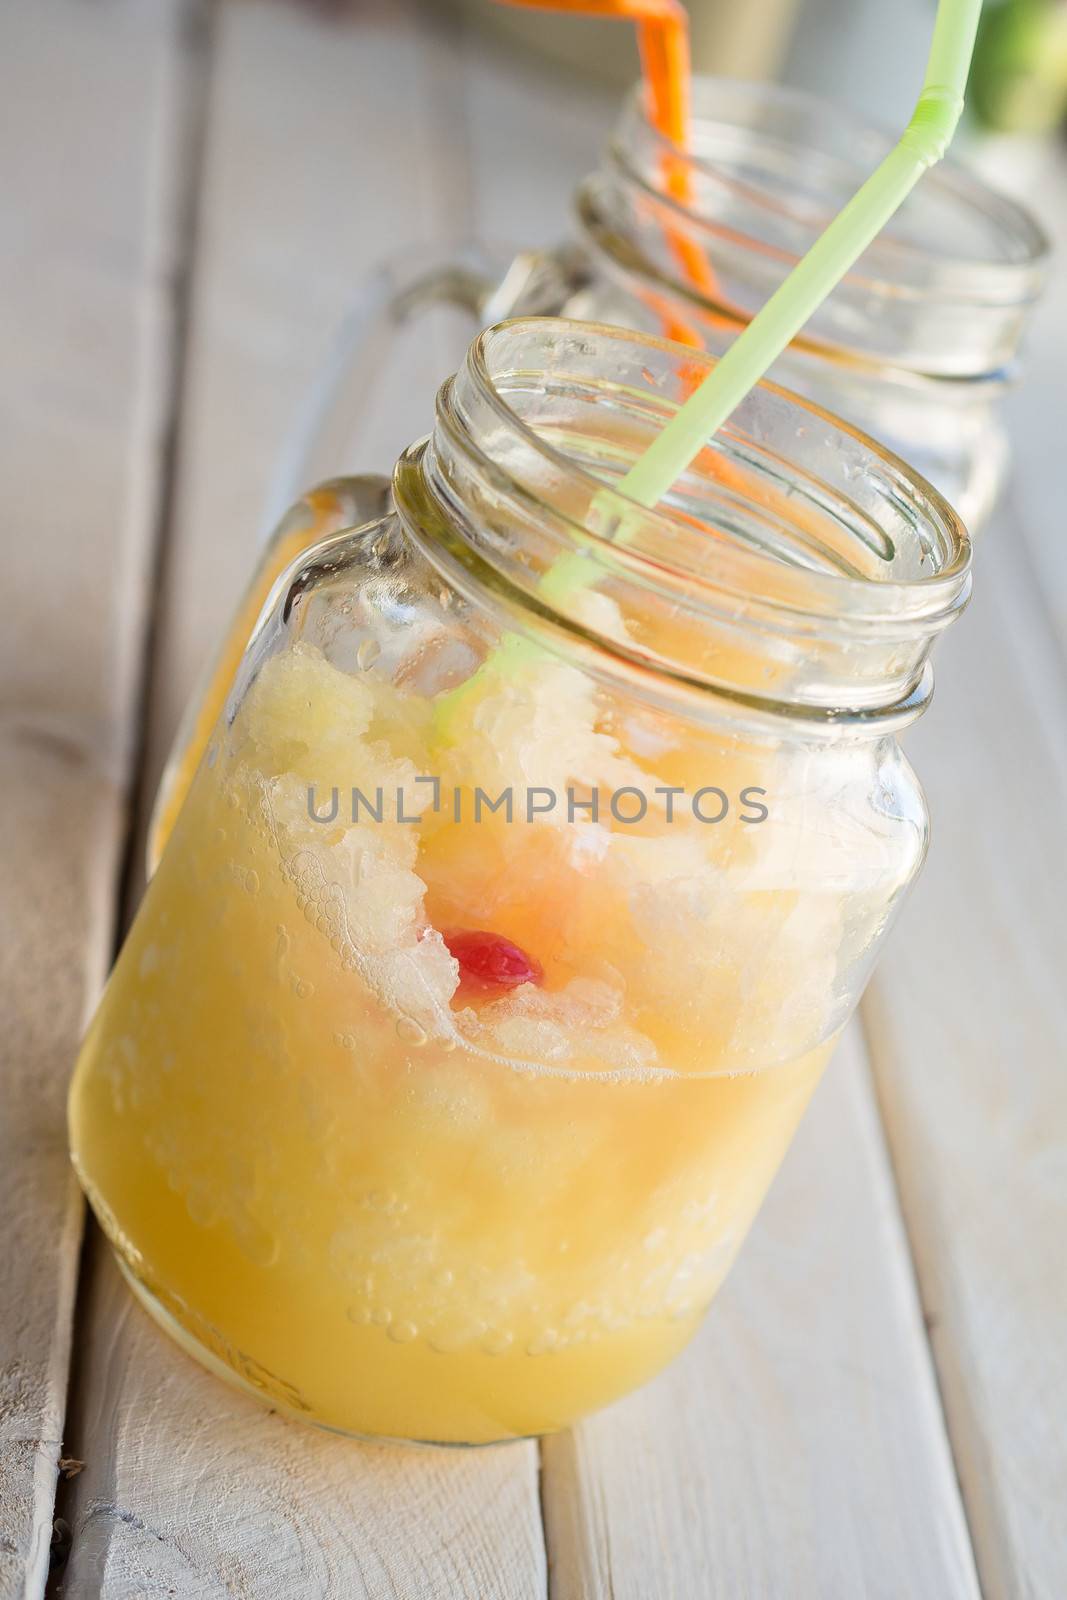 Homemade fruits slush in a jar with a straw